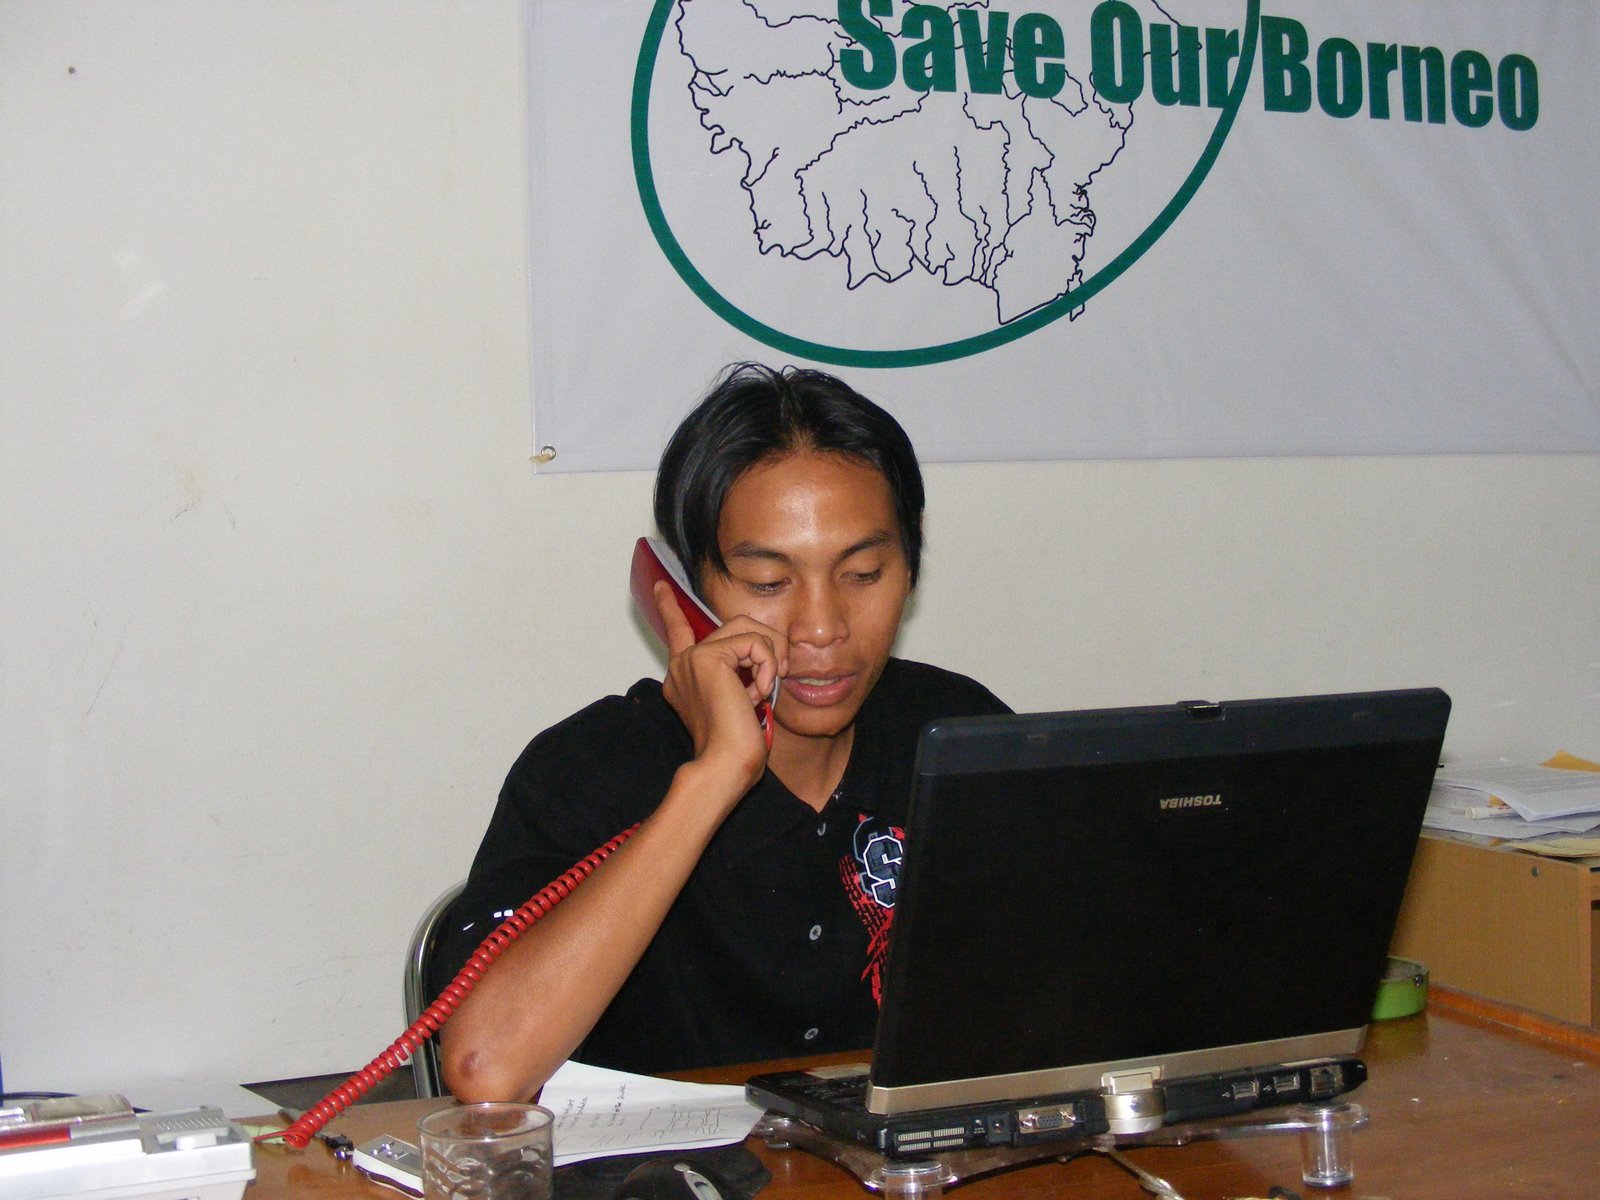 Save Our Borneo